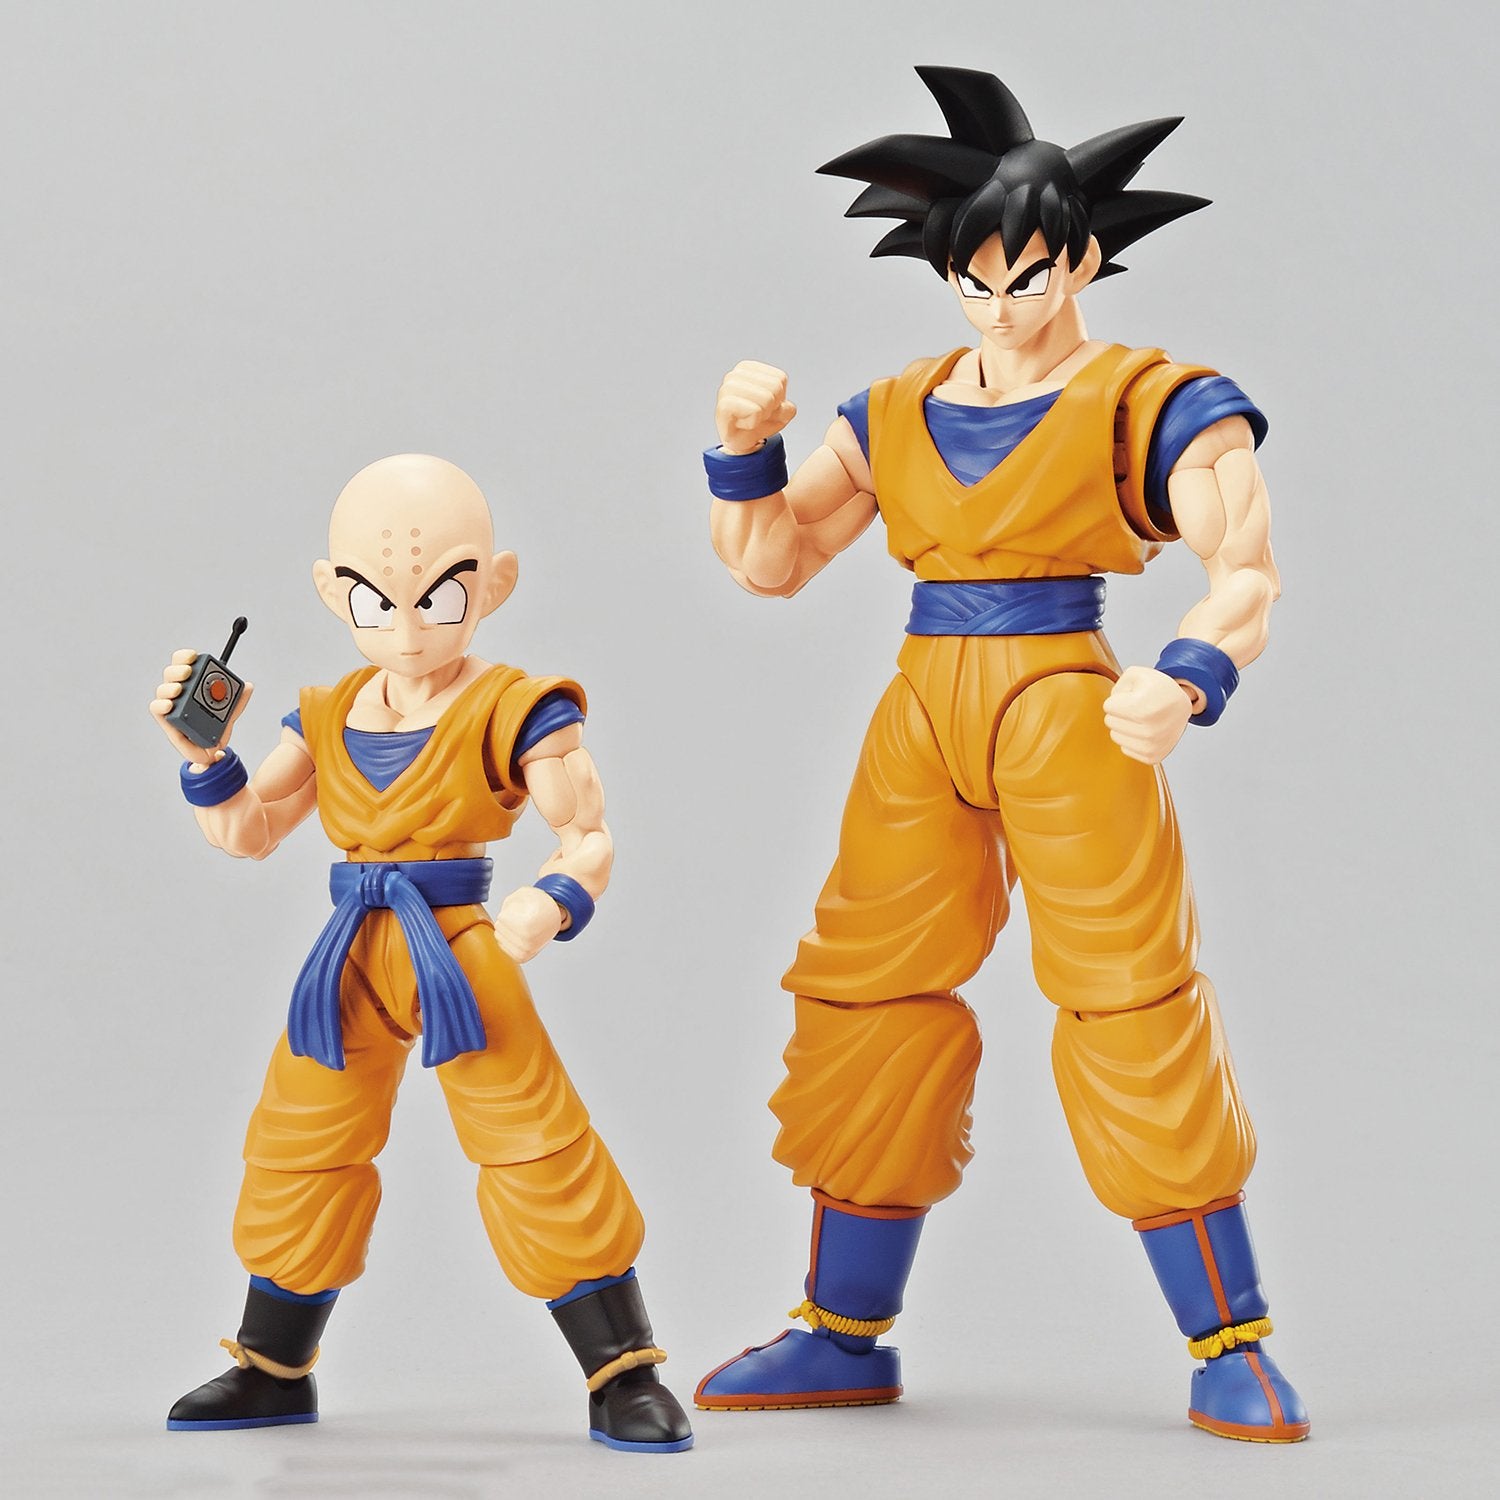 Figure-rise Standard - Son Goku & Krillin DX Set